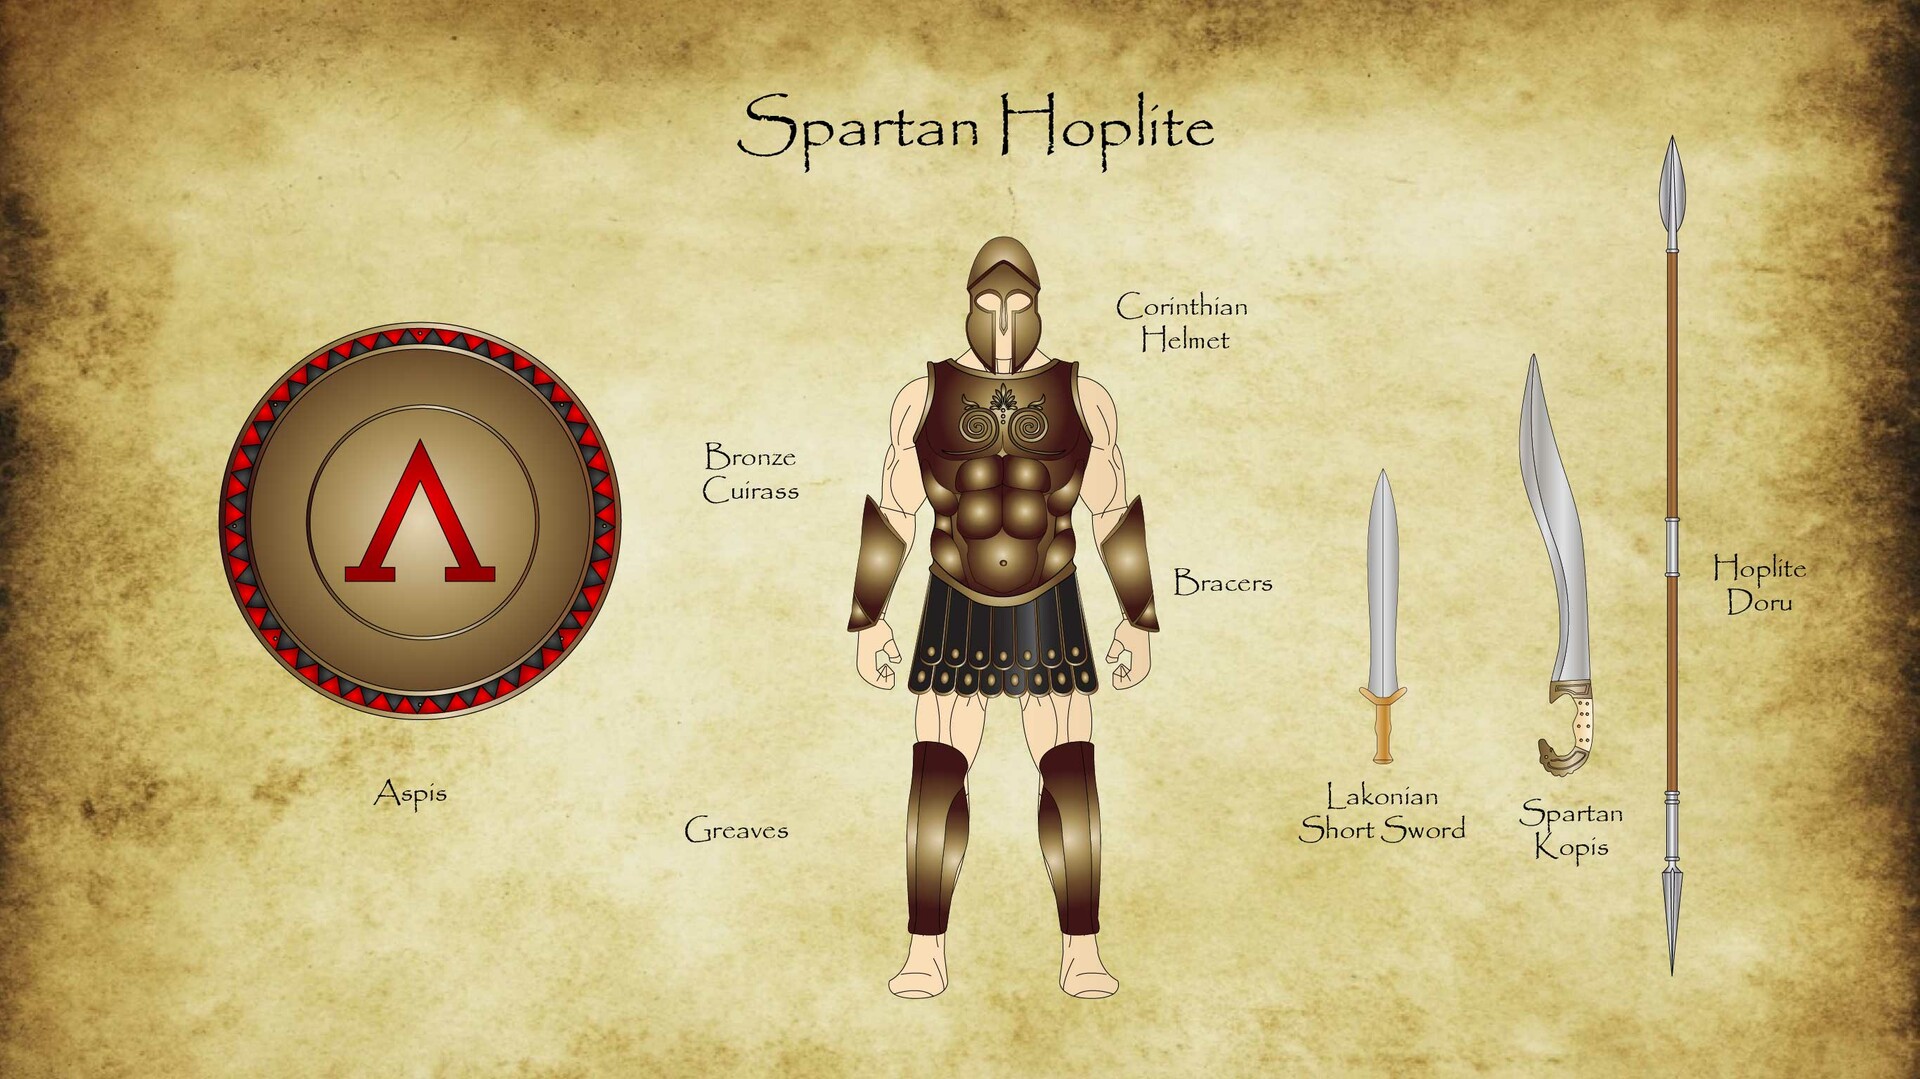 Spartan Hoplite Armor